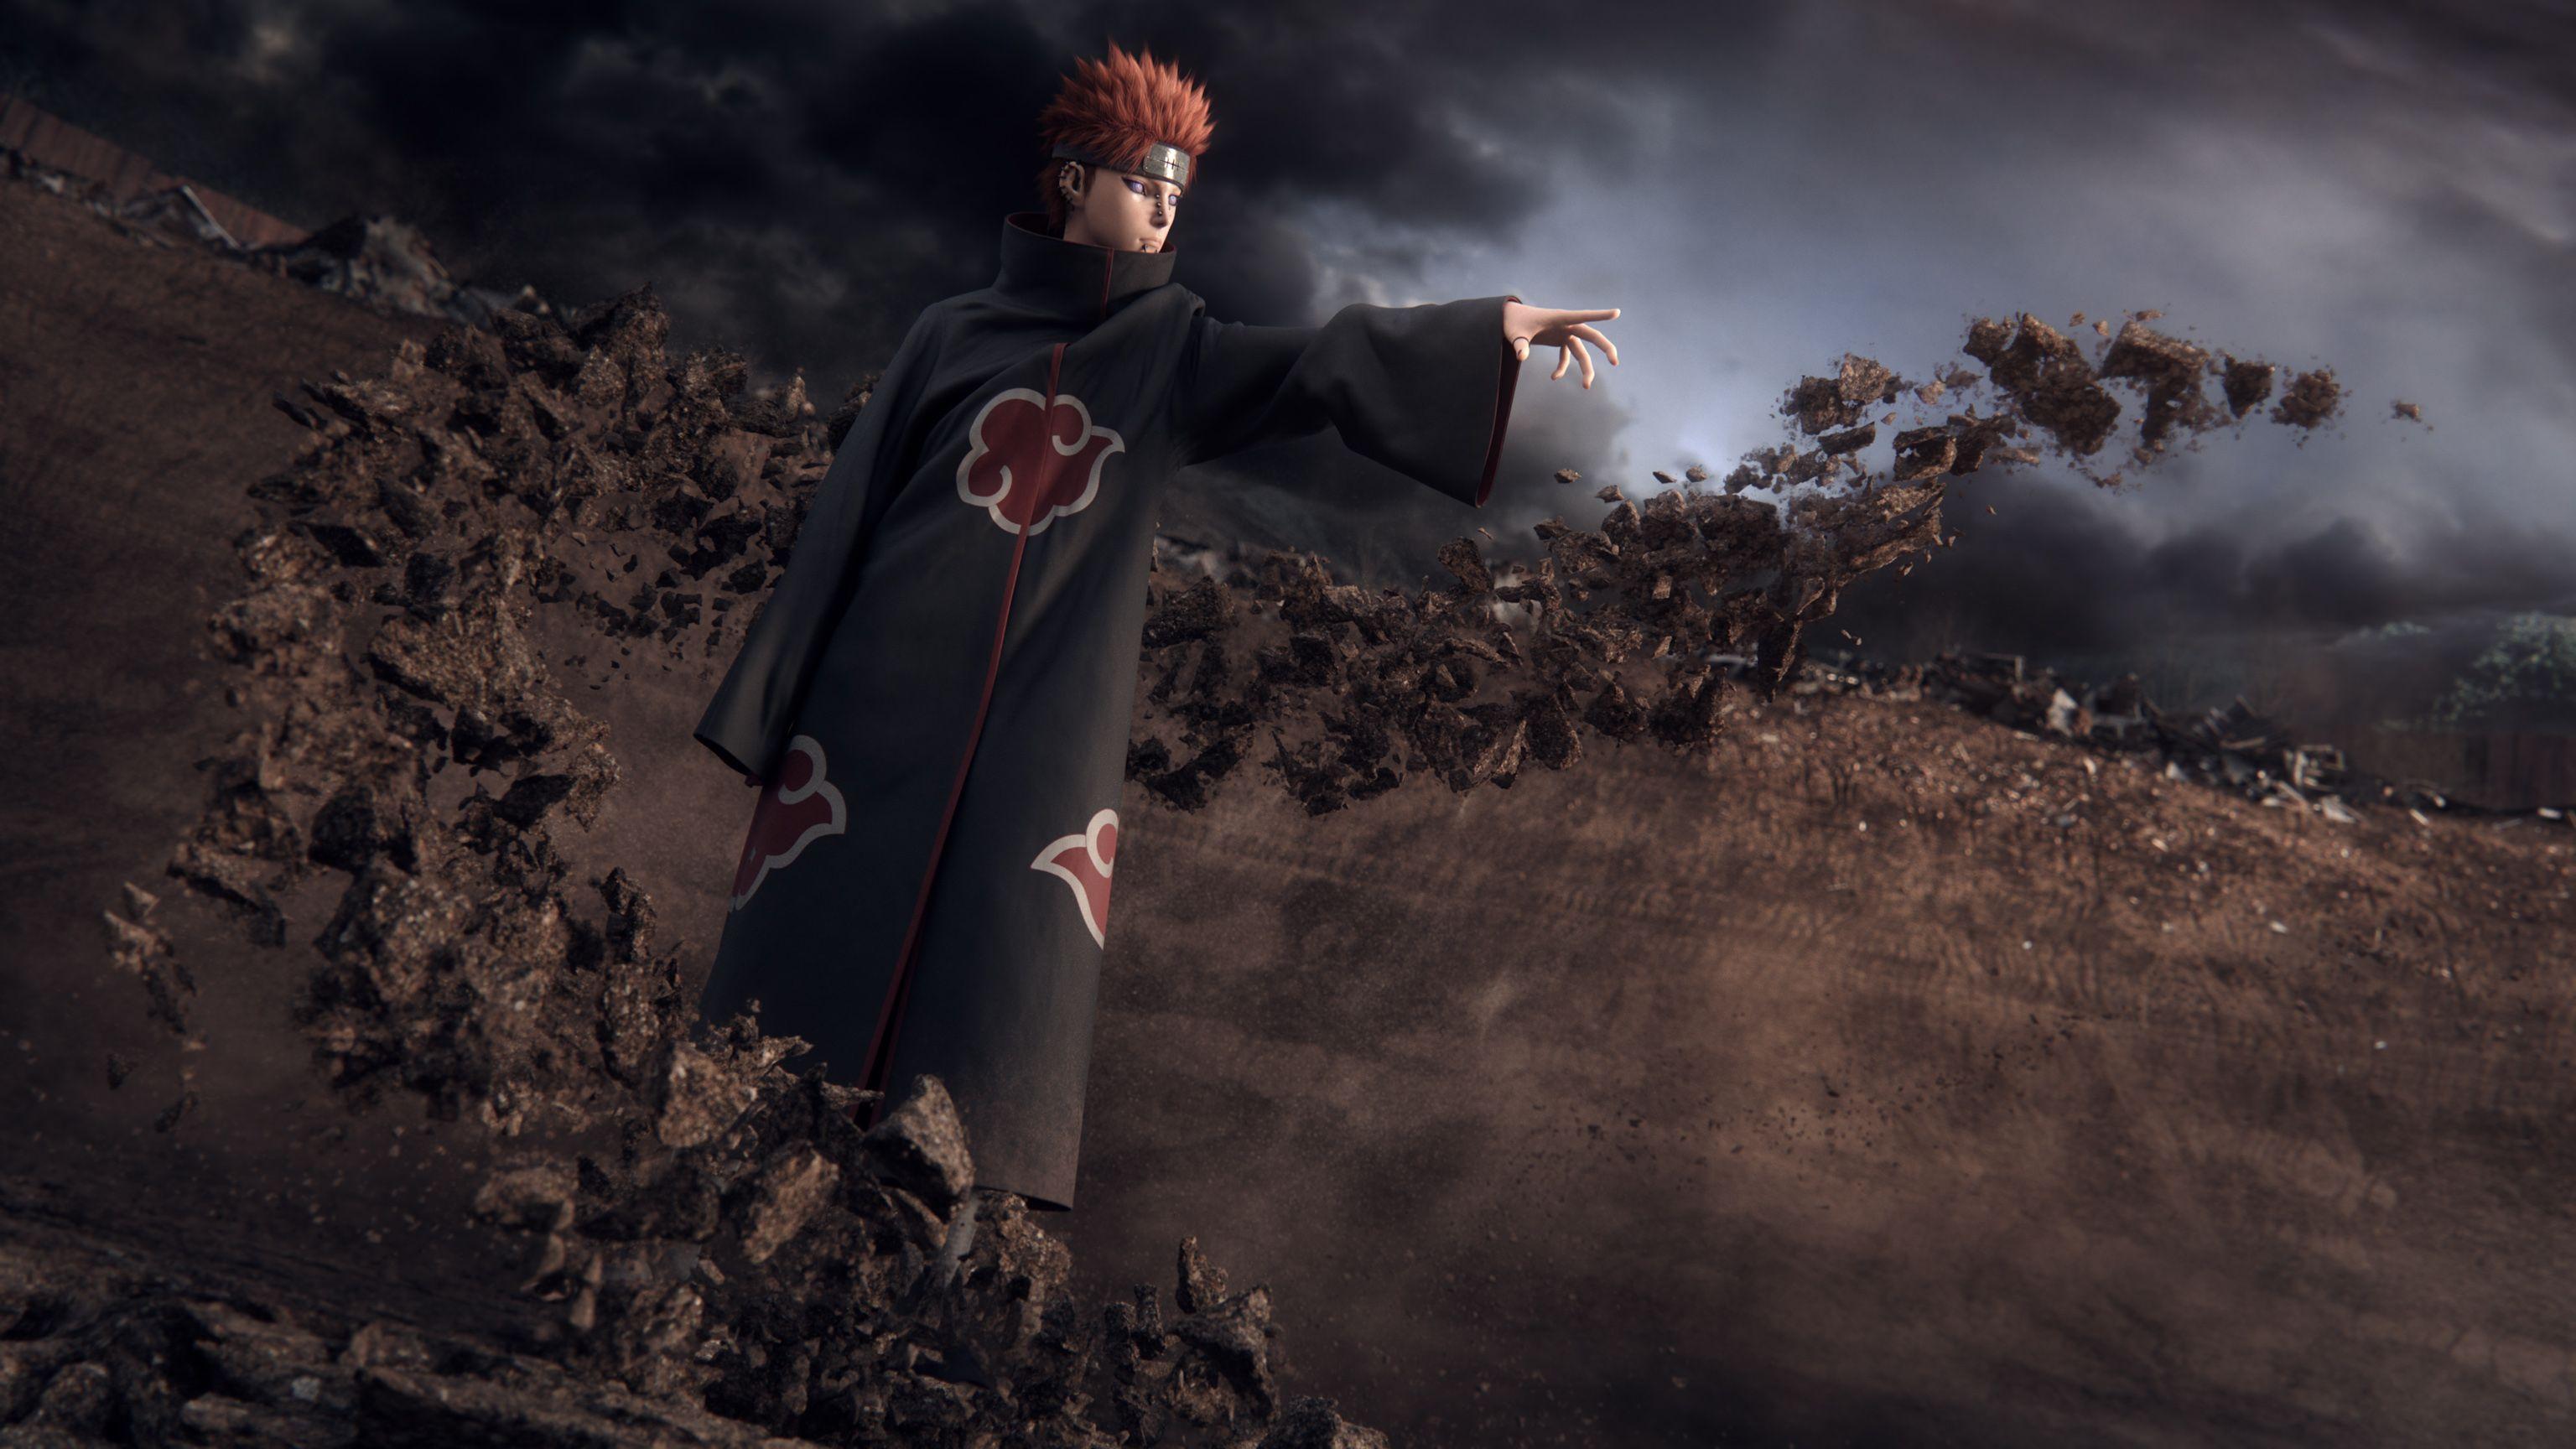 Naruto Tribute Six Paths Of Pain - ペイン六道 Pein